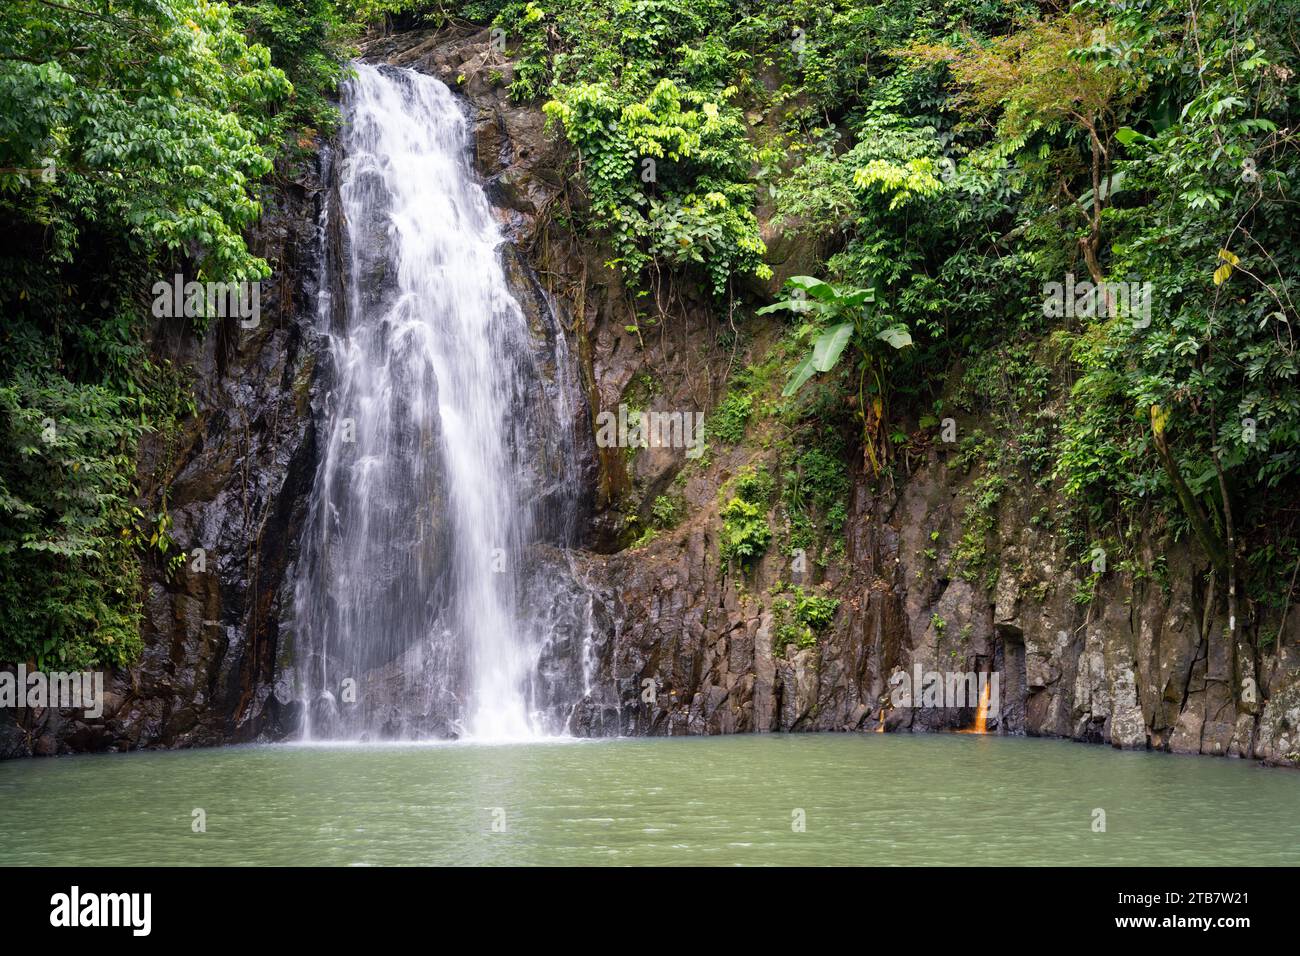 A stunning landscape featuring Taktak Falls, Siargao, Philippines Stock Photo